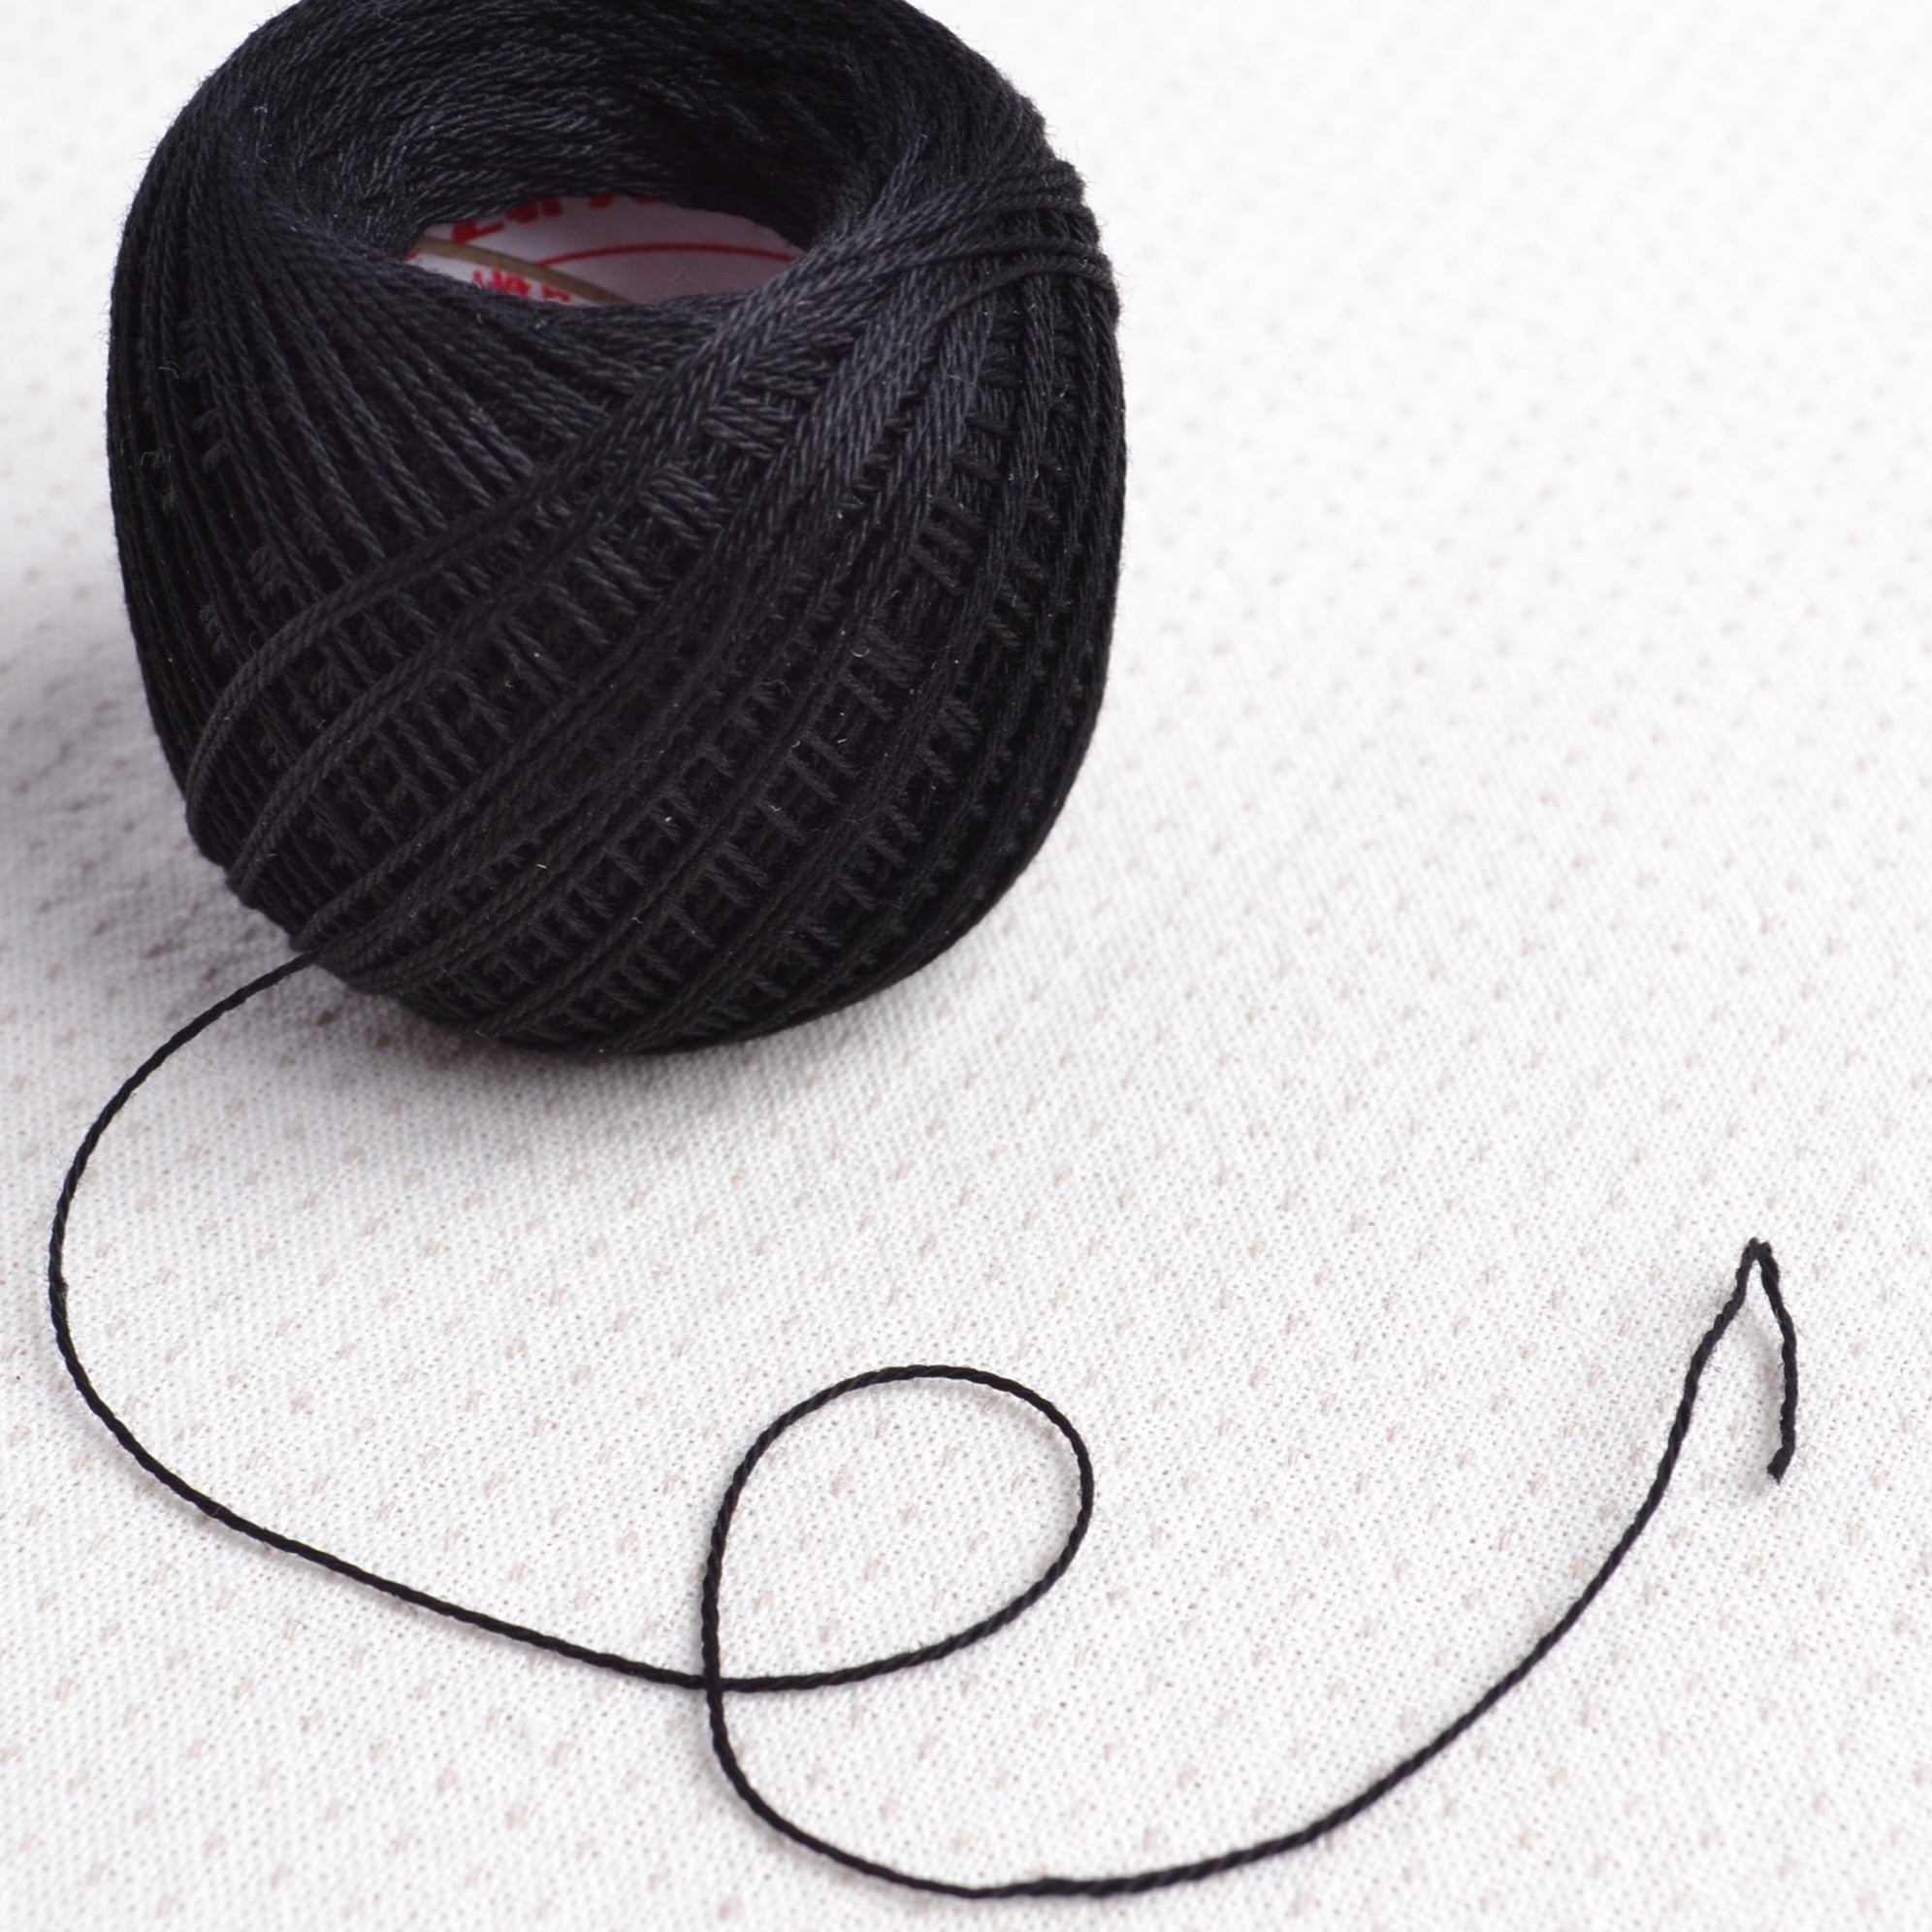 Black thin sashiko thread